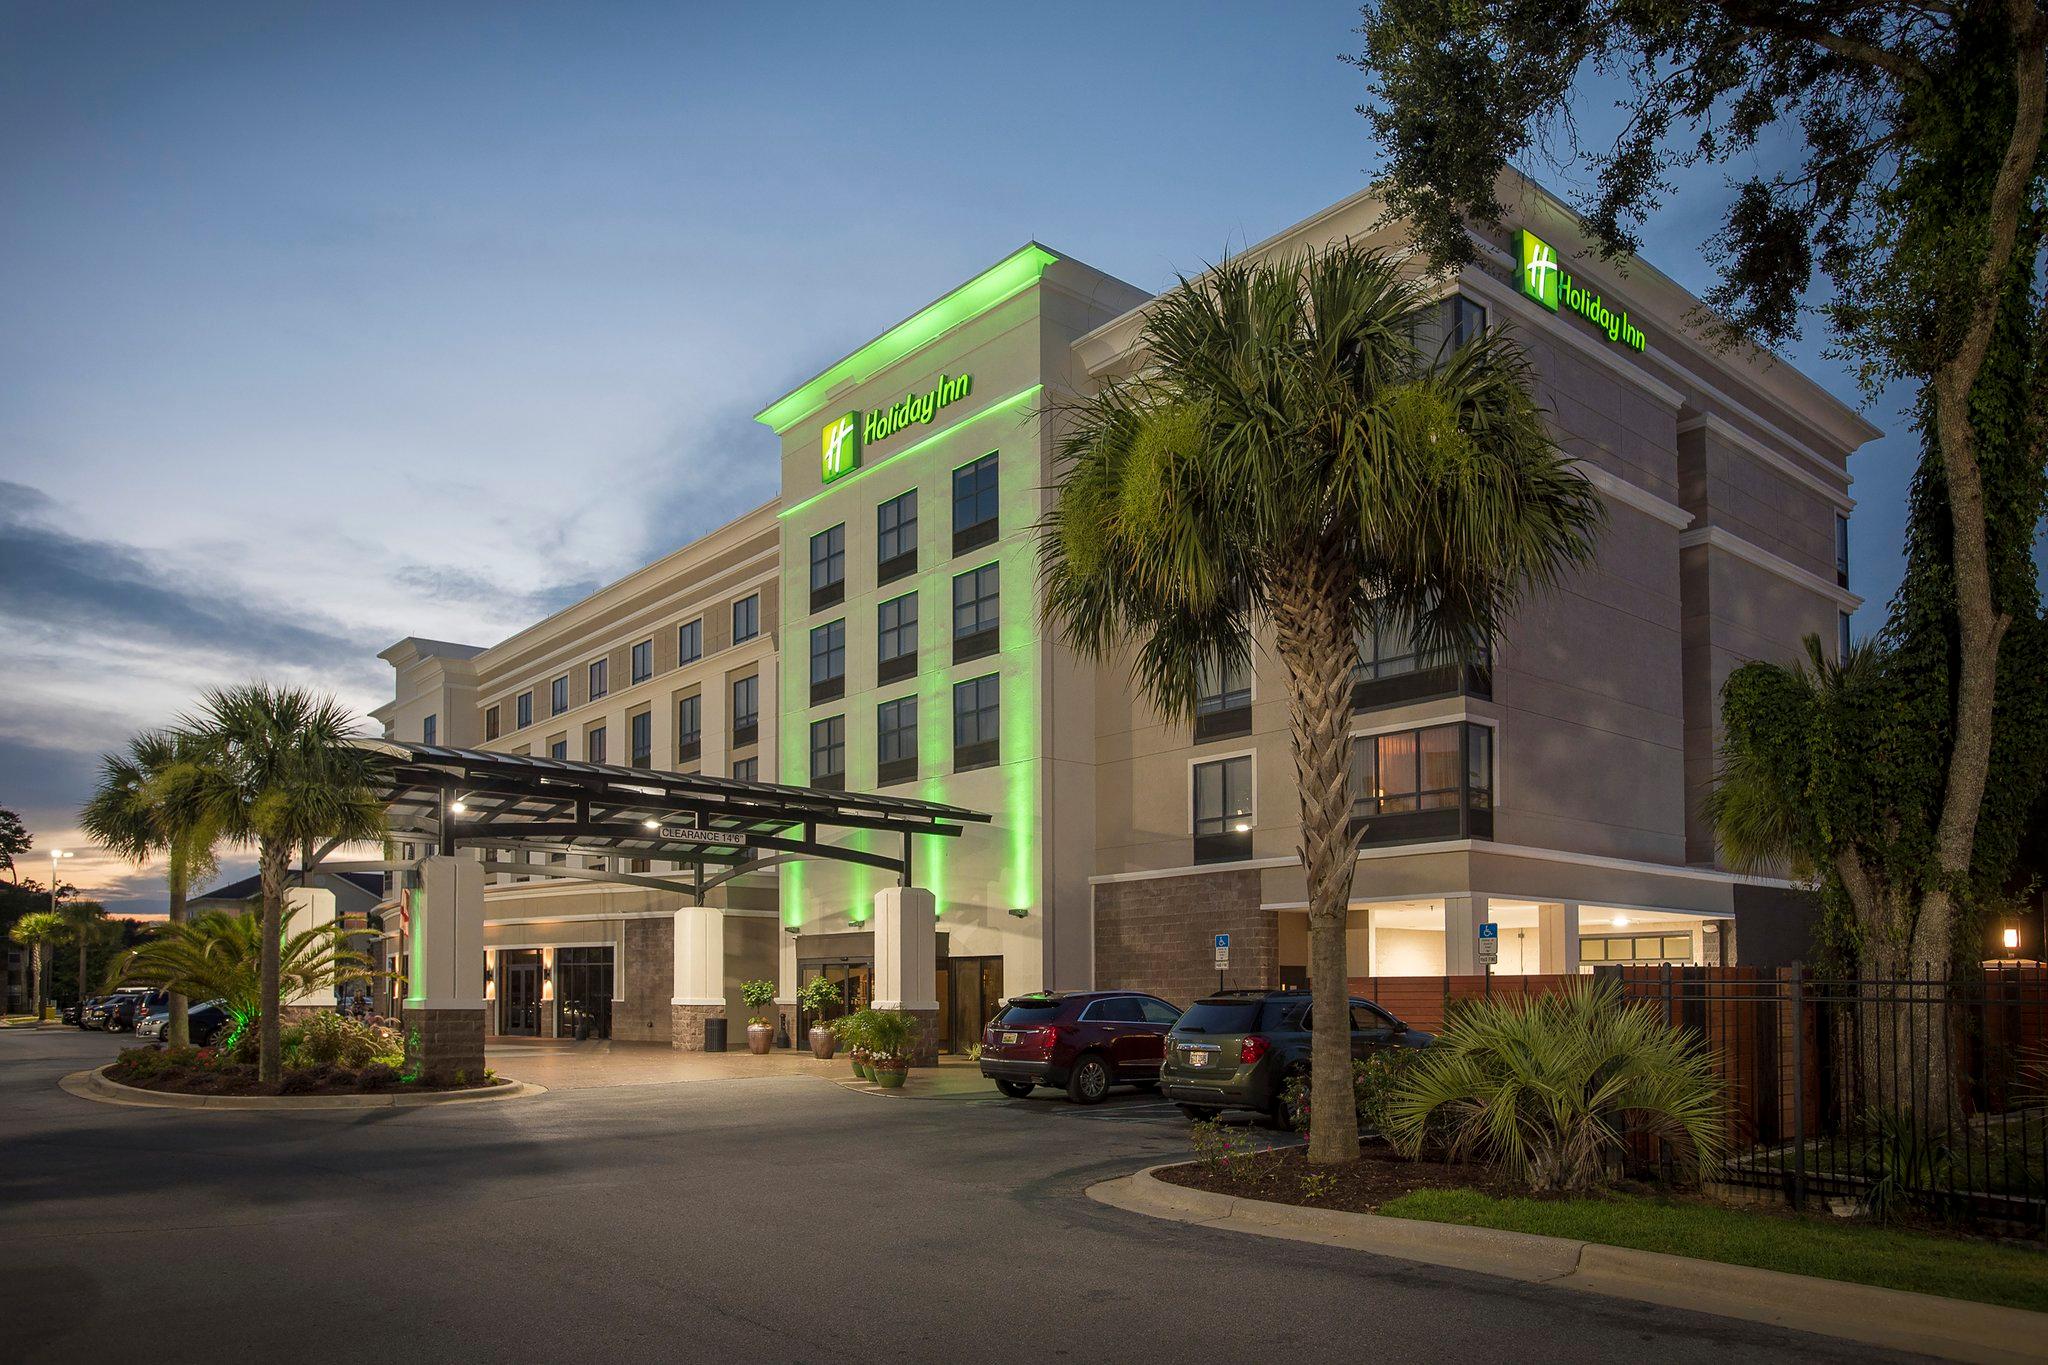 Holiday Inn Pensacola - University Area in Pensacola, FL